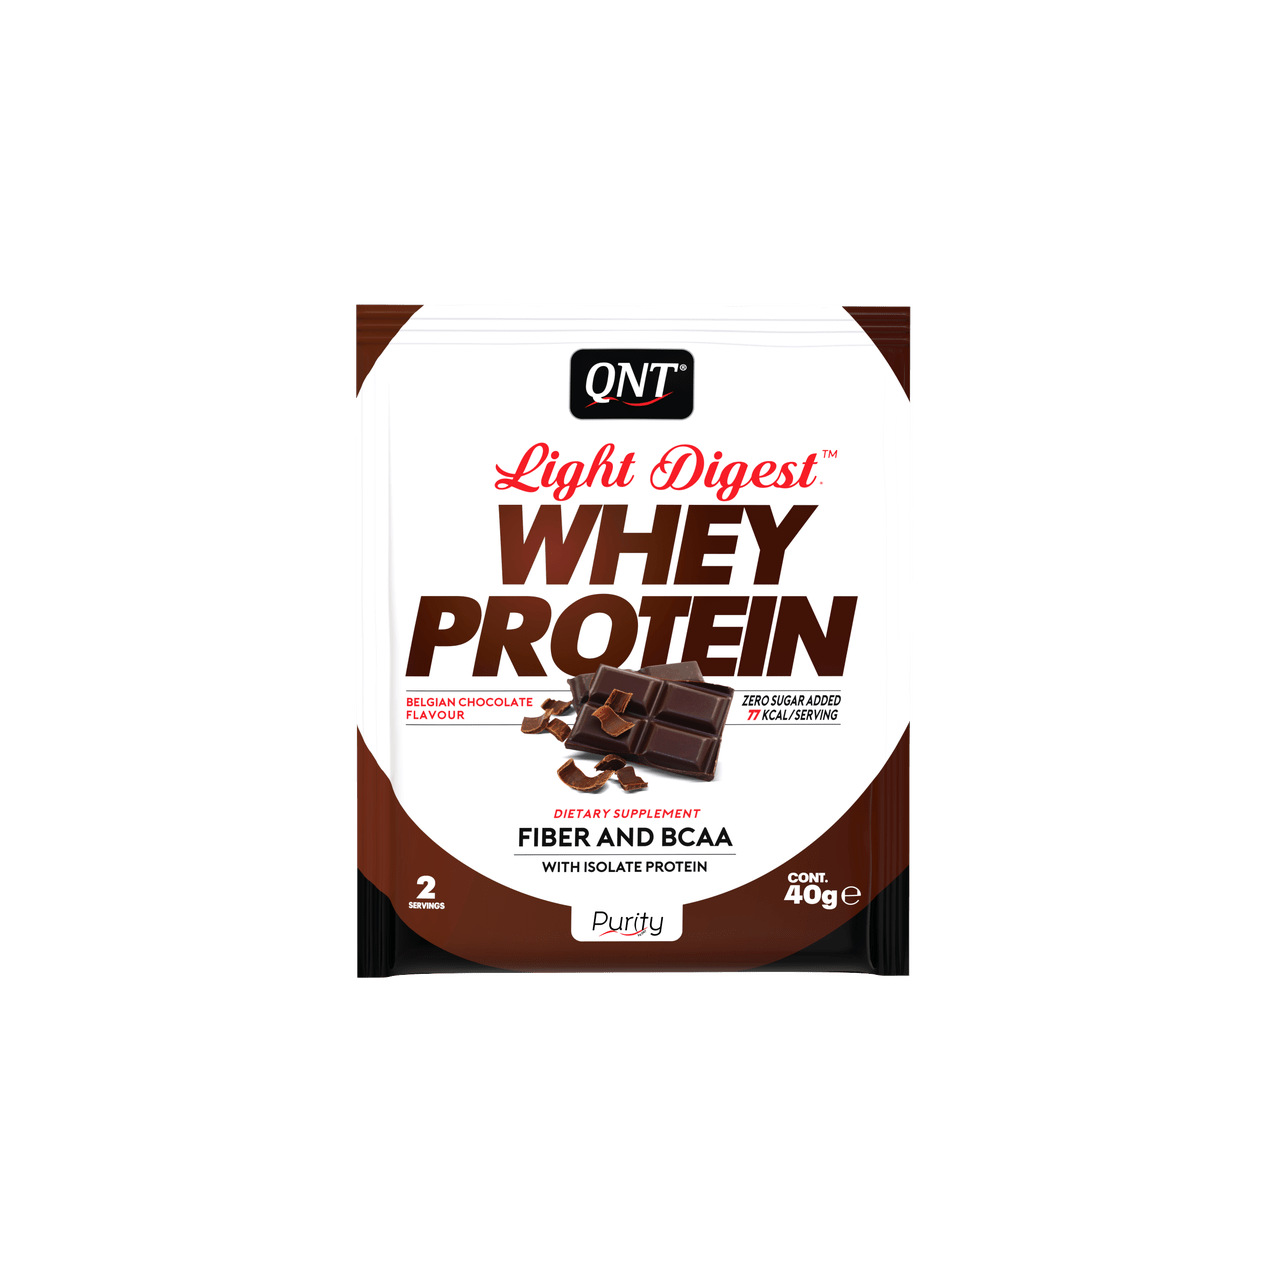 Сывороточный протеин концентрат QNT Light Digest Whey protein (500 г) кюнт belgian chocolate,  ml, QNT. Whey Concentrate. Mass Gain recovery Anti-catabolic properties 